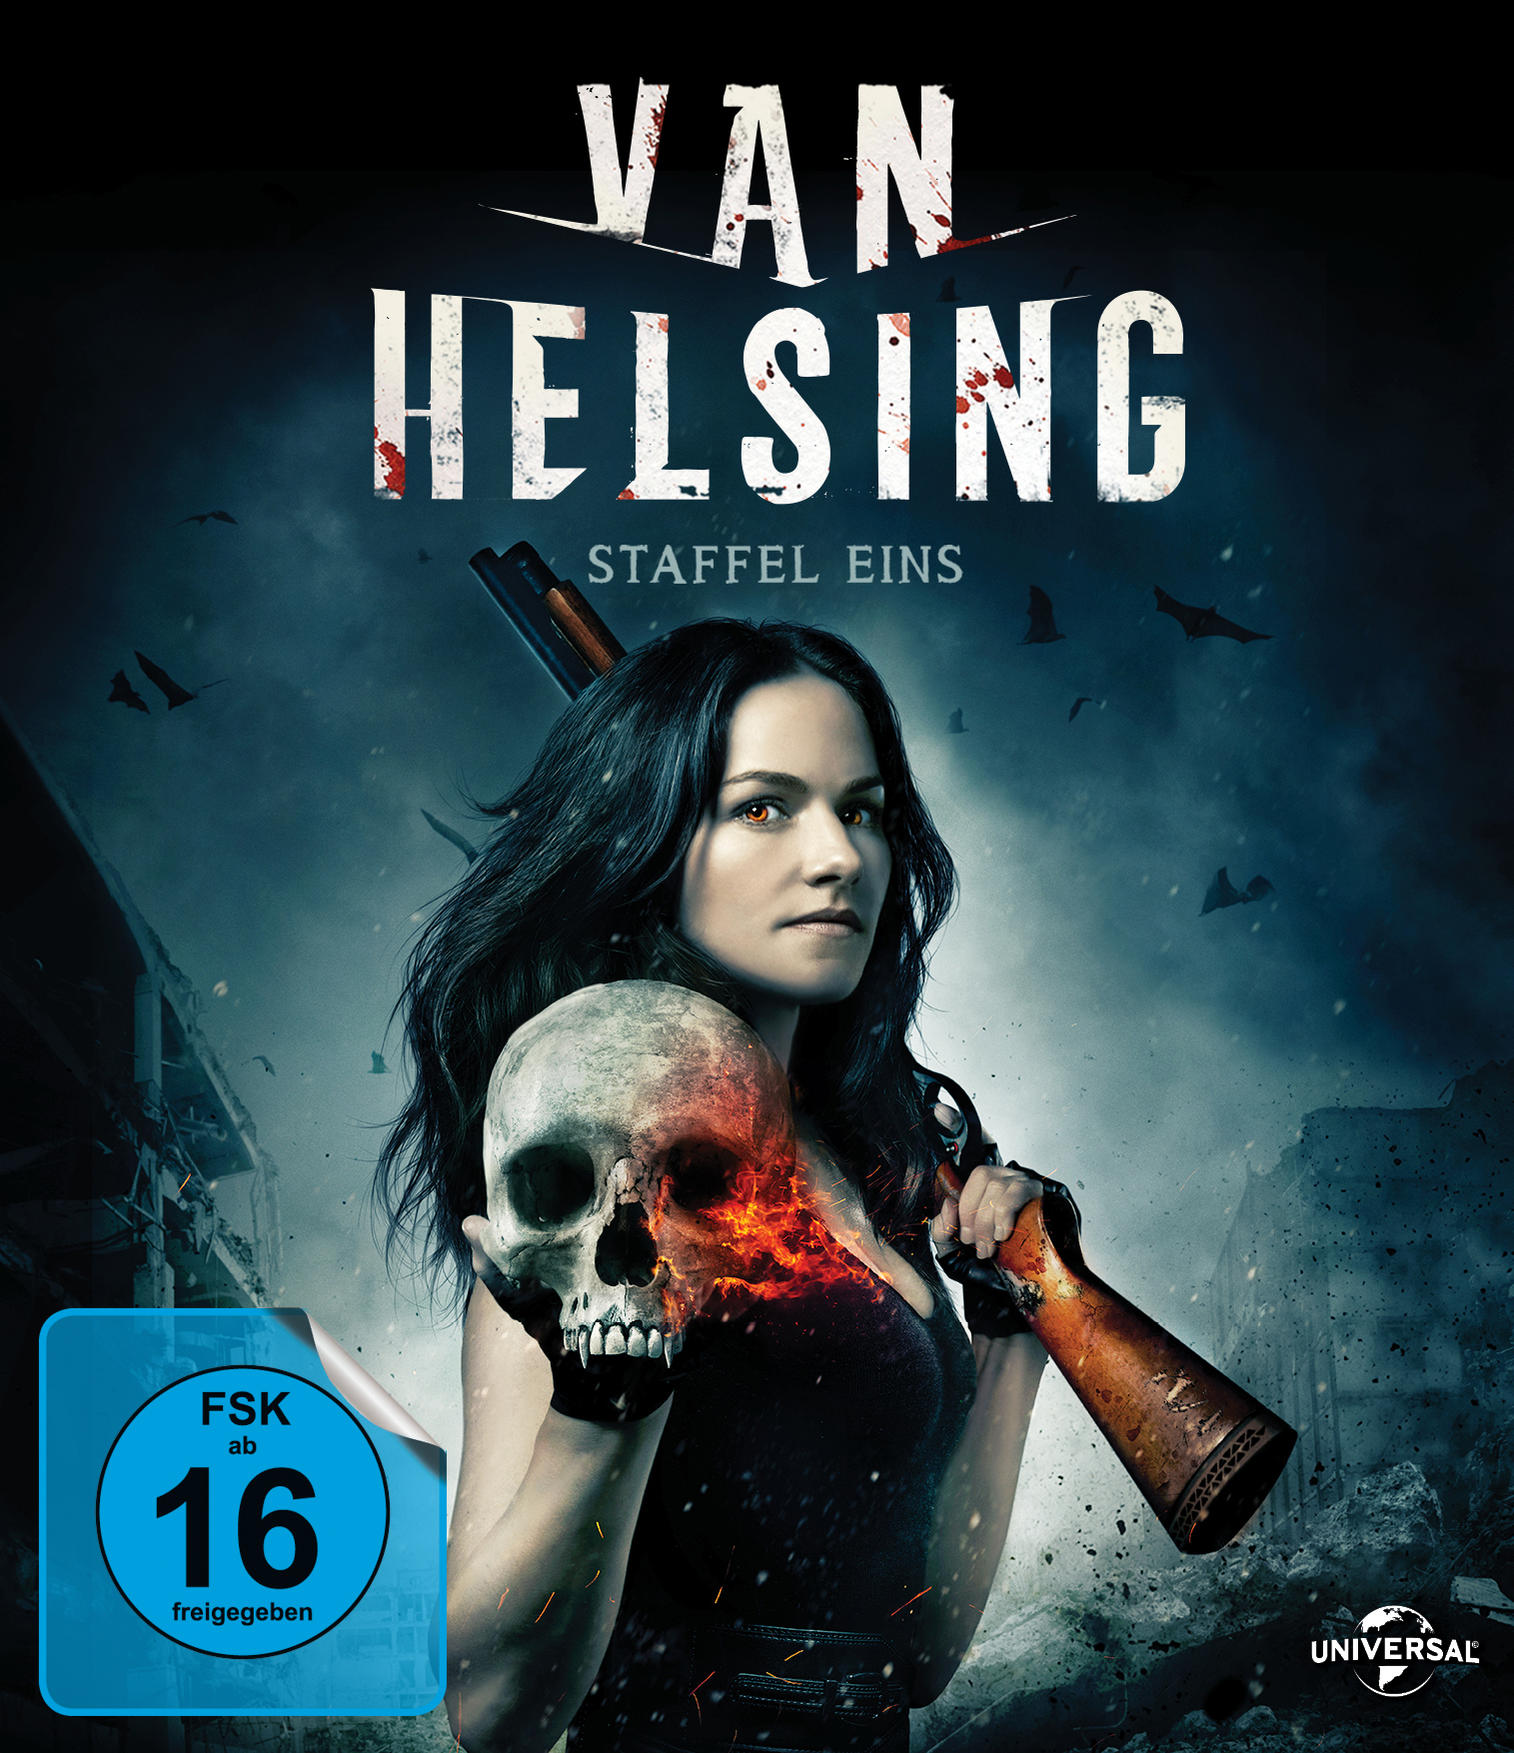 Blu-ray Van 1 Helsing - Staffel